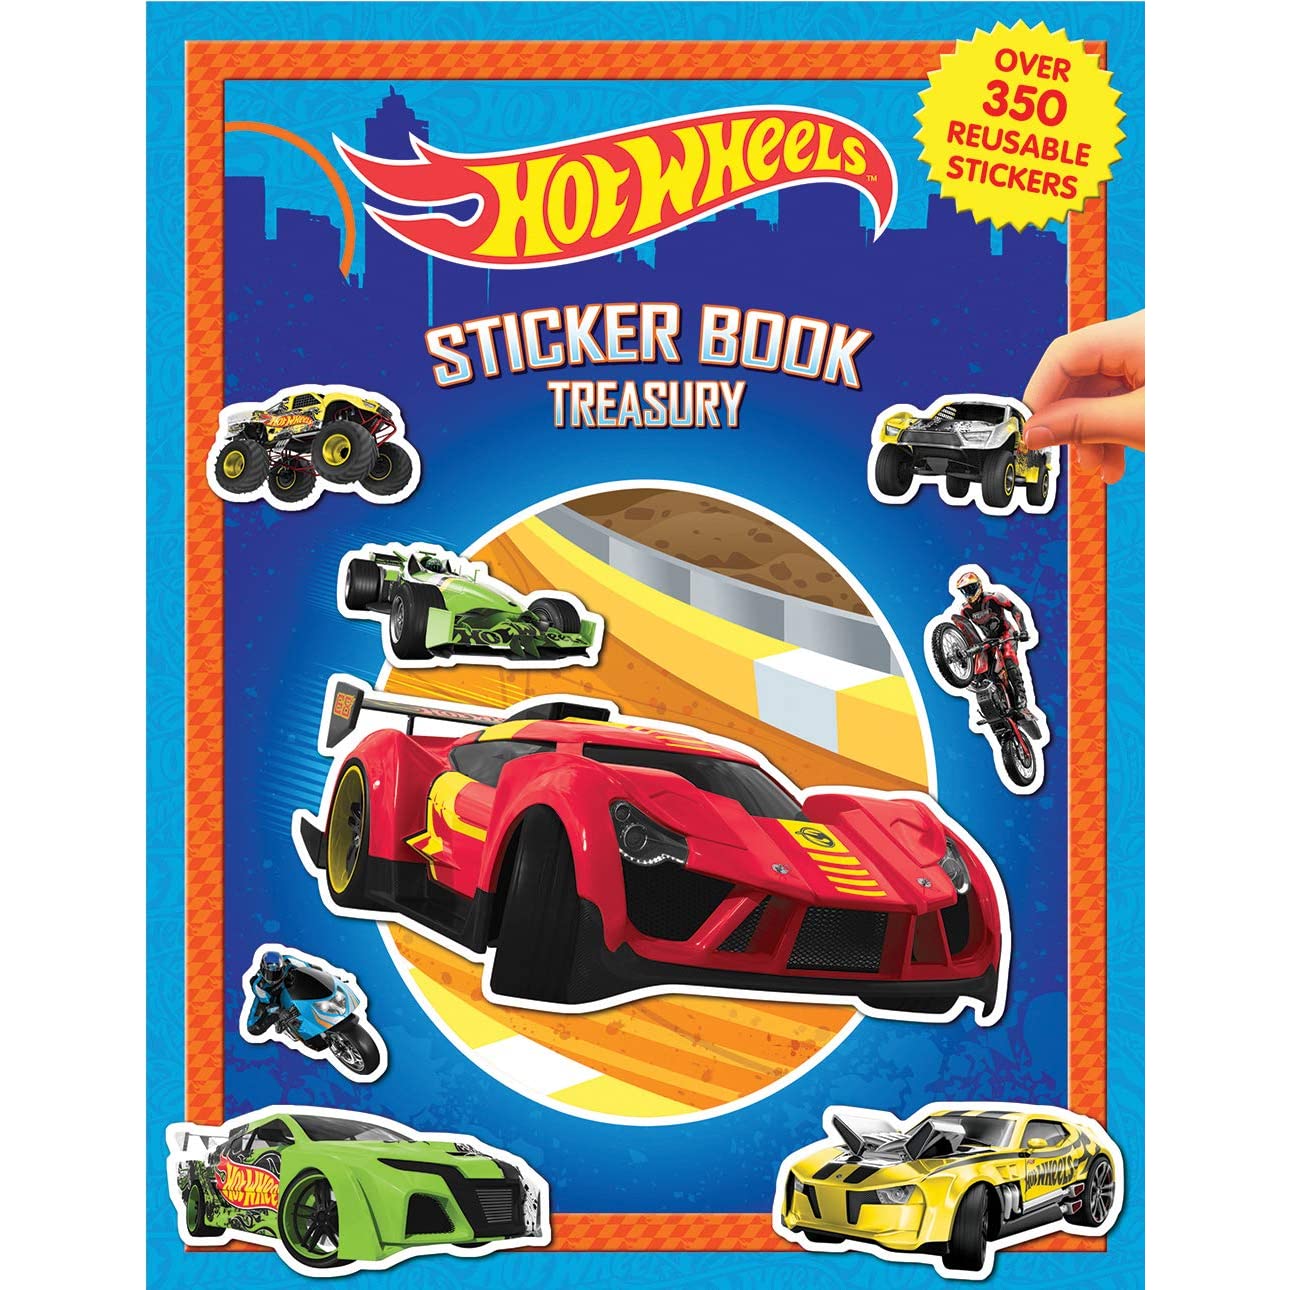 Buy Hot Wheels Sticker Book Treasury Online in Dubai & the UAE